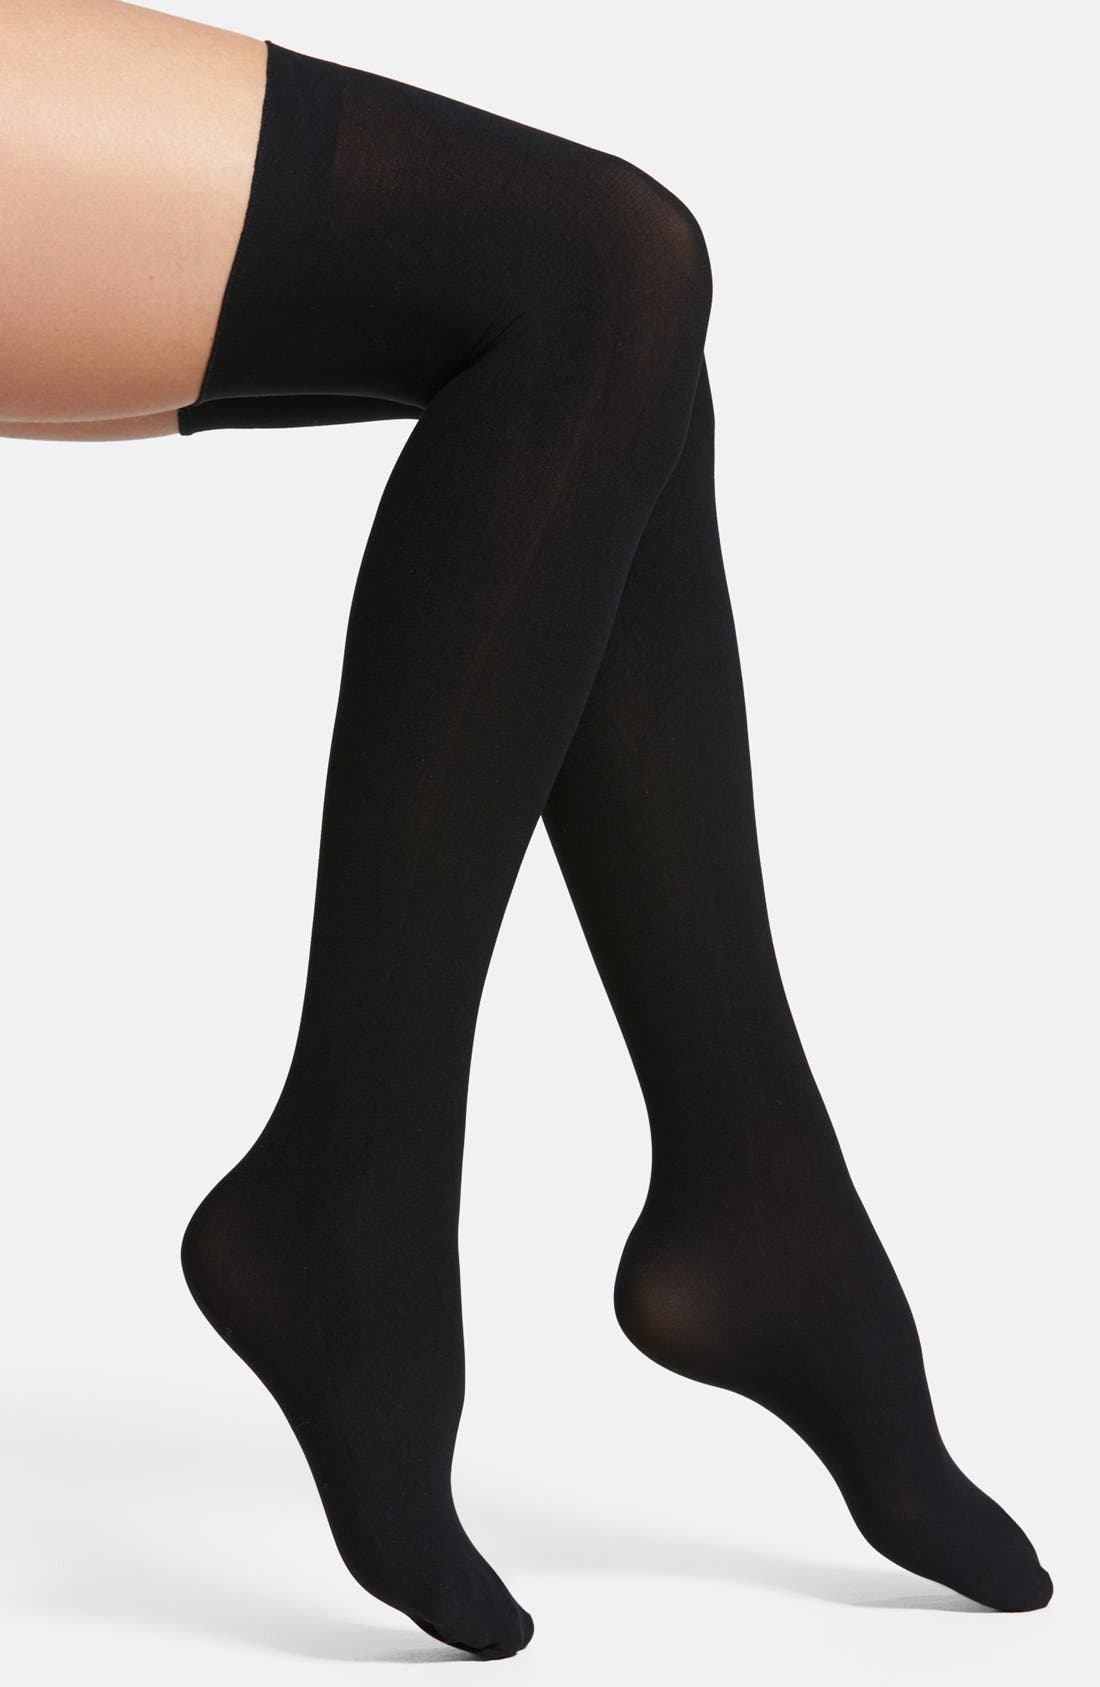 Xngtax Thigh High Socks Pumpkin Halloween Womans Mens Fashion Champion Athletic Leggings Knee High Stockings For Dress Sport